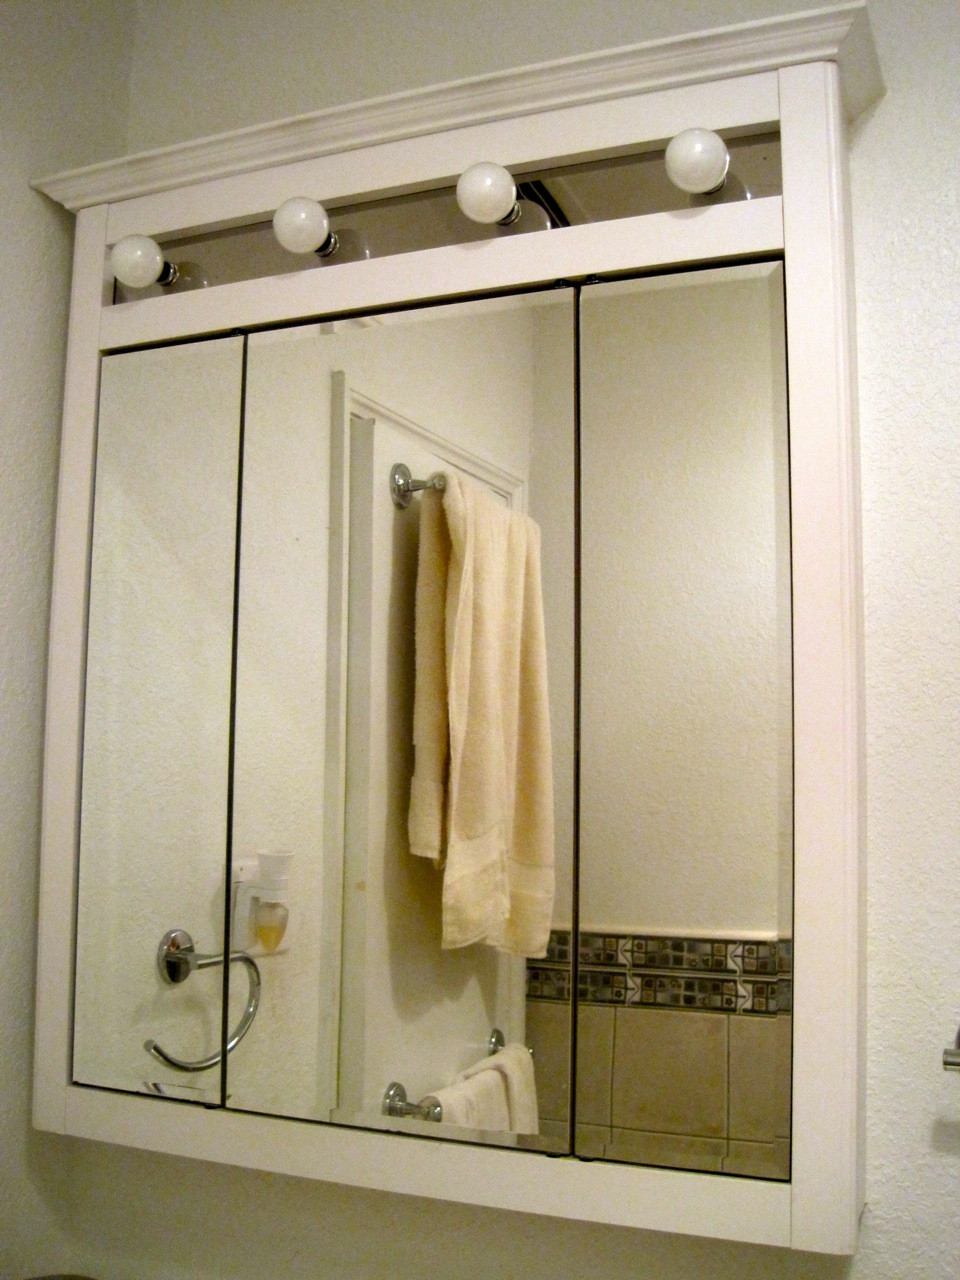 Bathroom Medicine Cabinets With Lights
 In Wall Medicine Cabinet Ideas – HomesFeed